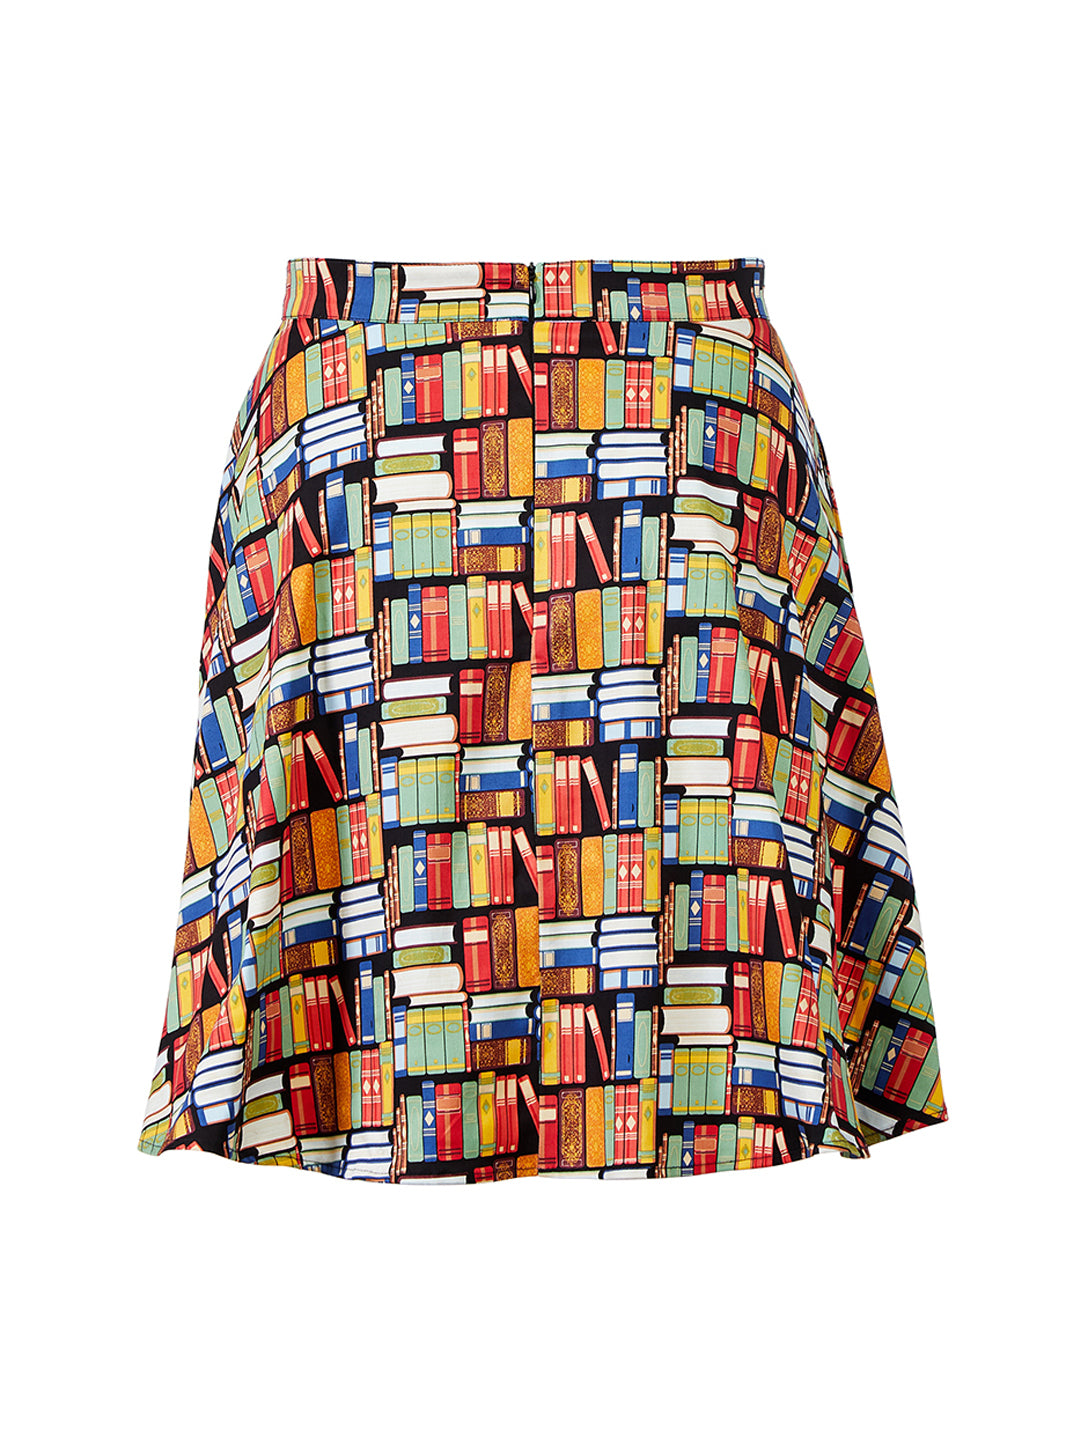 Book Club Skirt